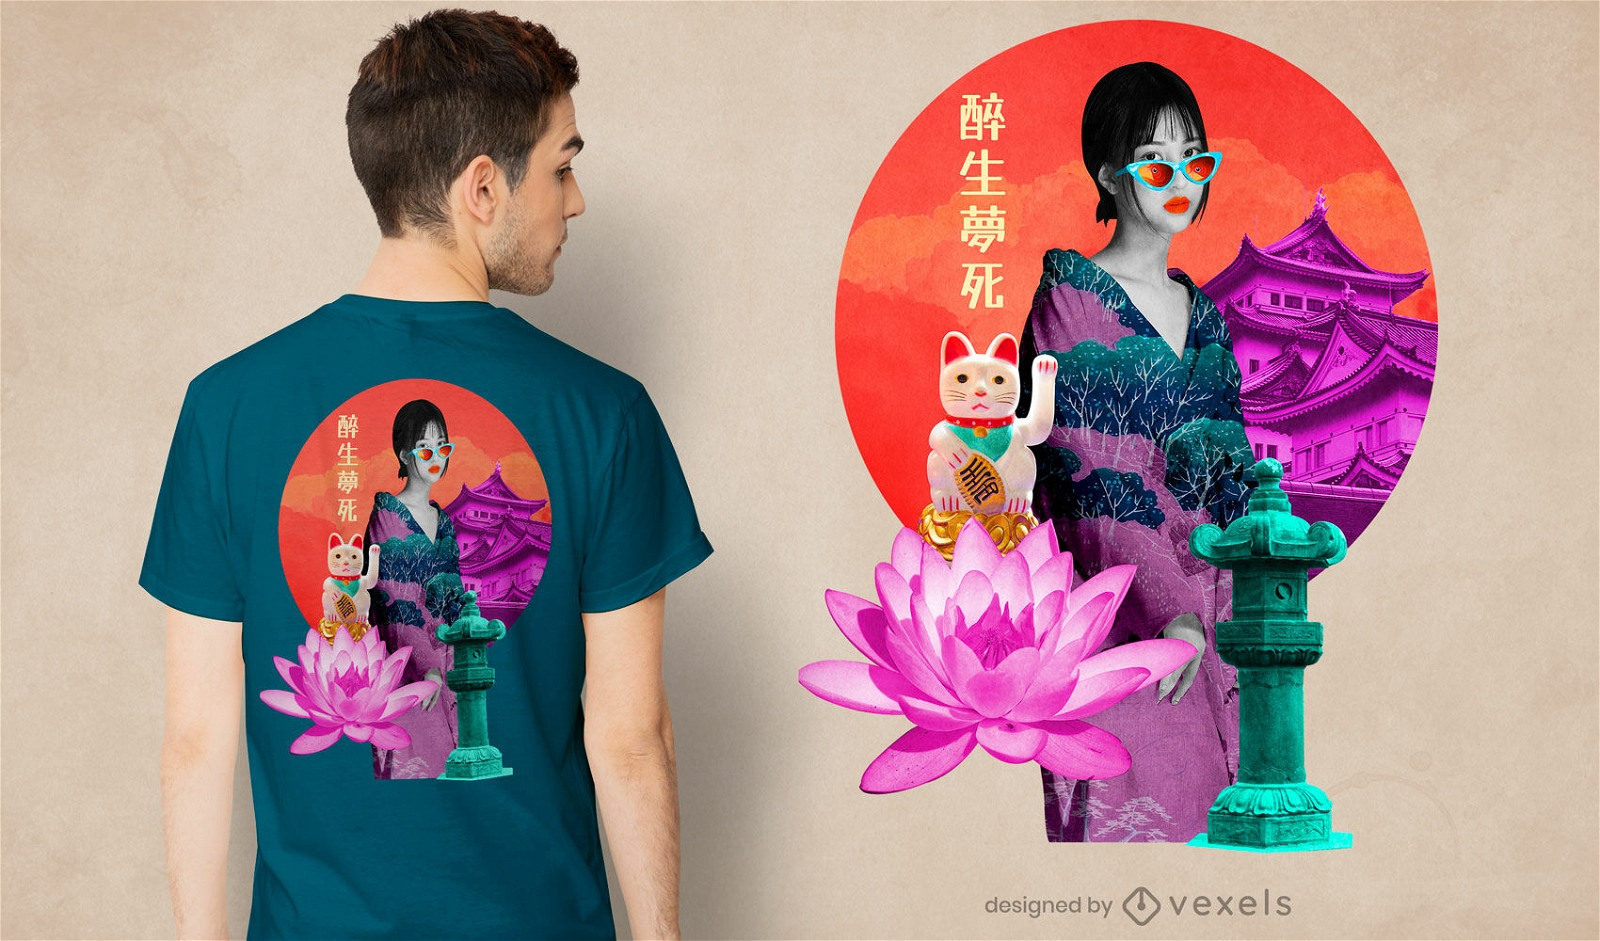 Camiseta japonesa con collage fotogr?fico psd